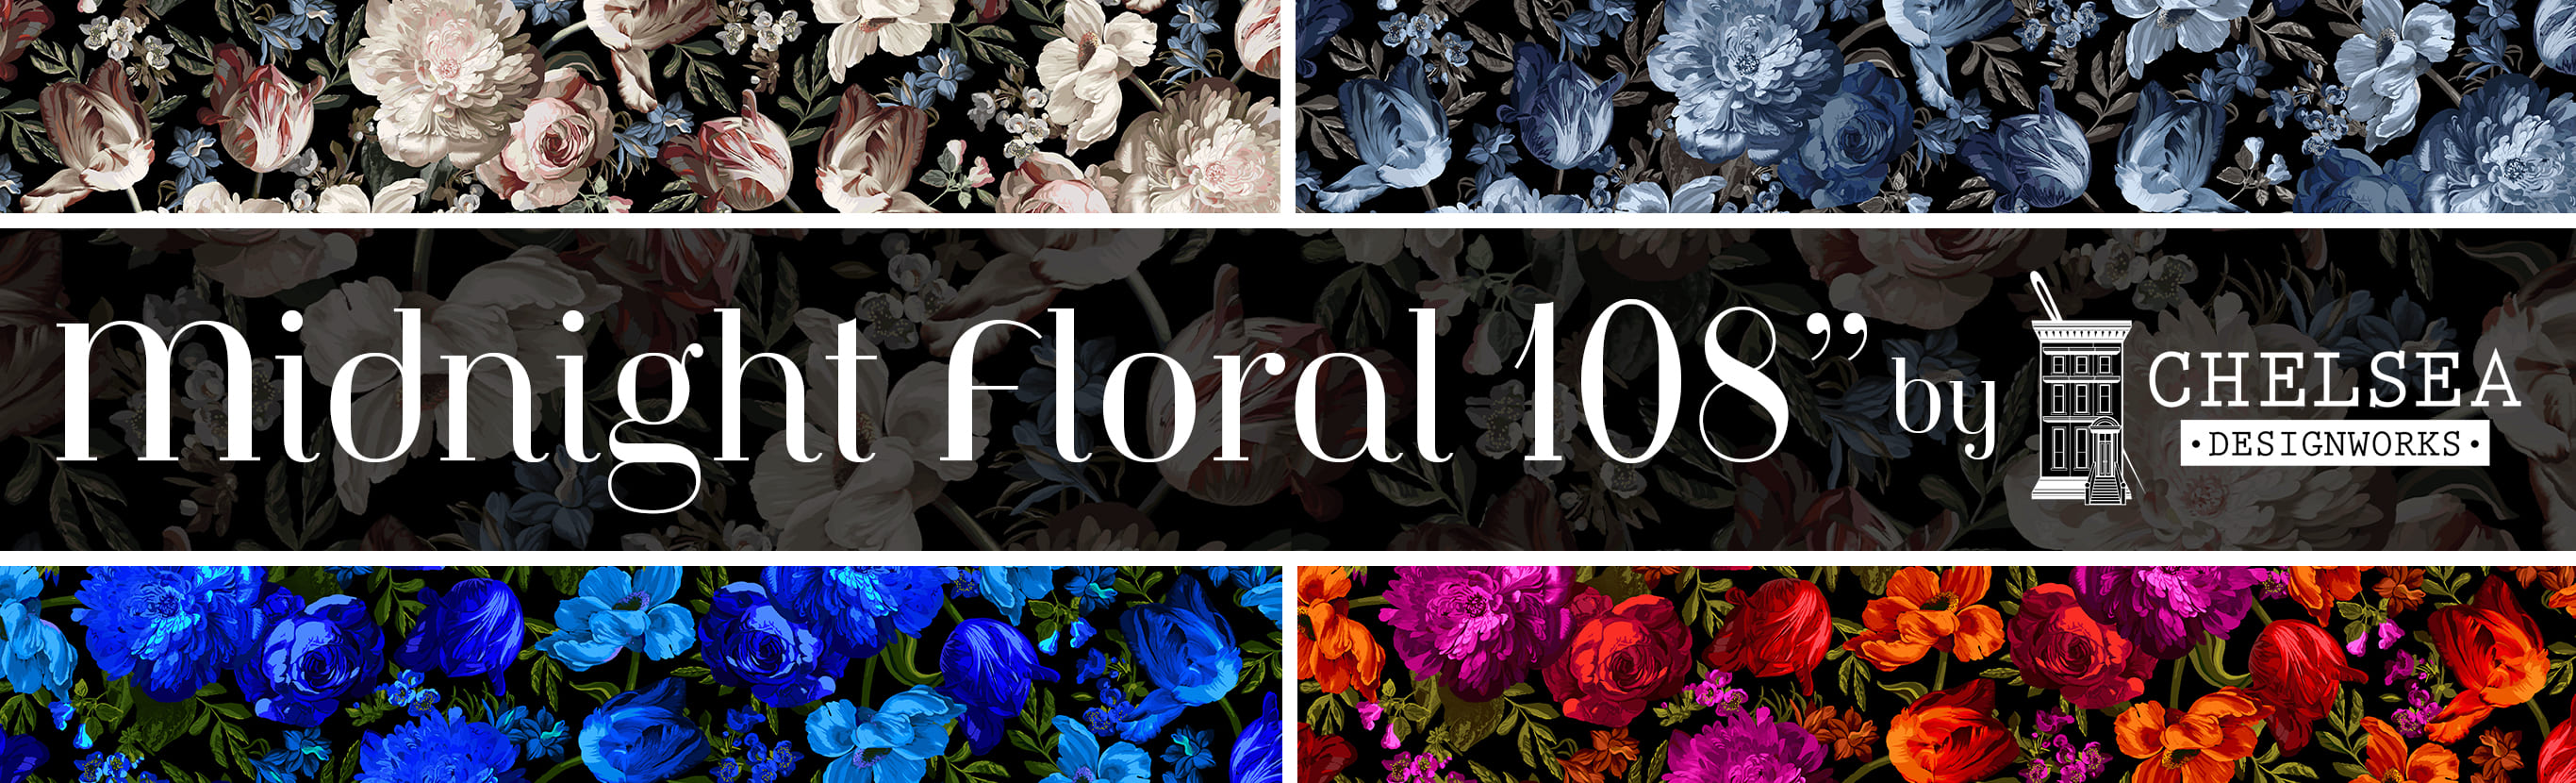 Midnight Floral 108